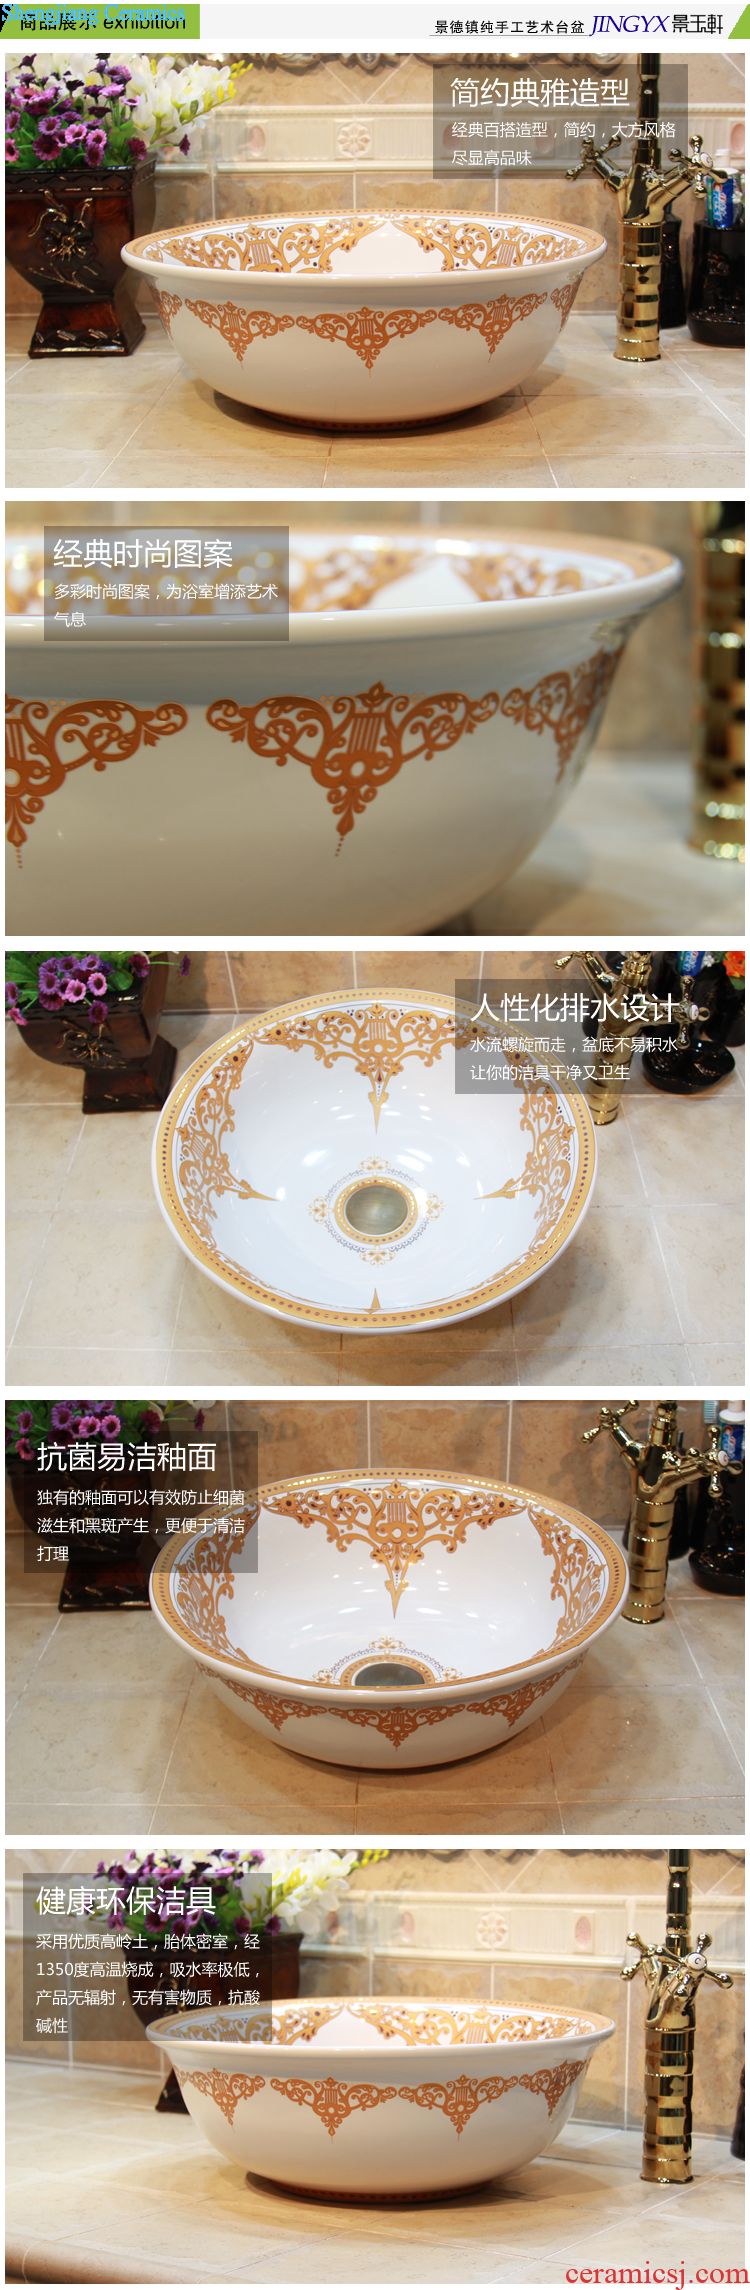 JingYuXuan jingdezhen ceramic art basin stage basin sinks lavabo birdbath ishikawa lotus